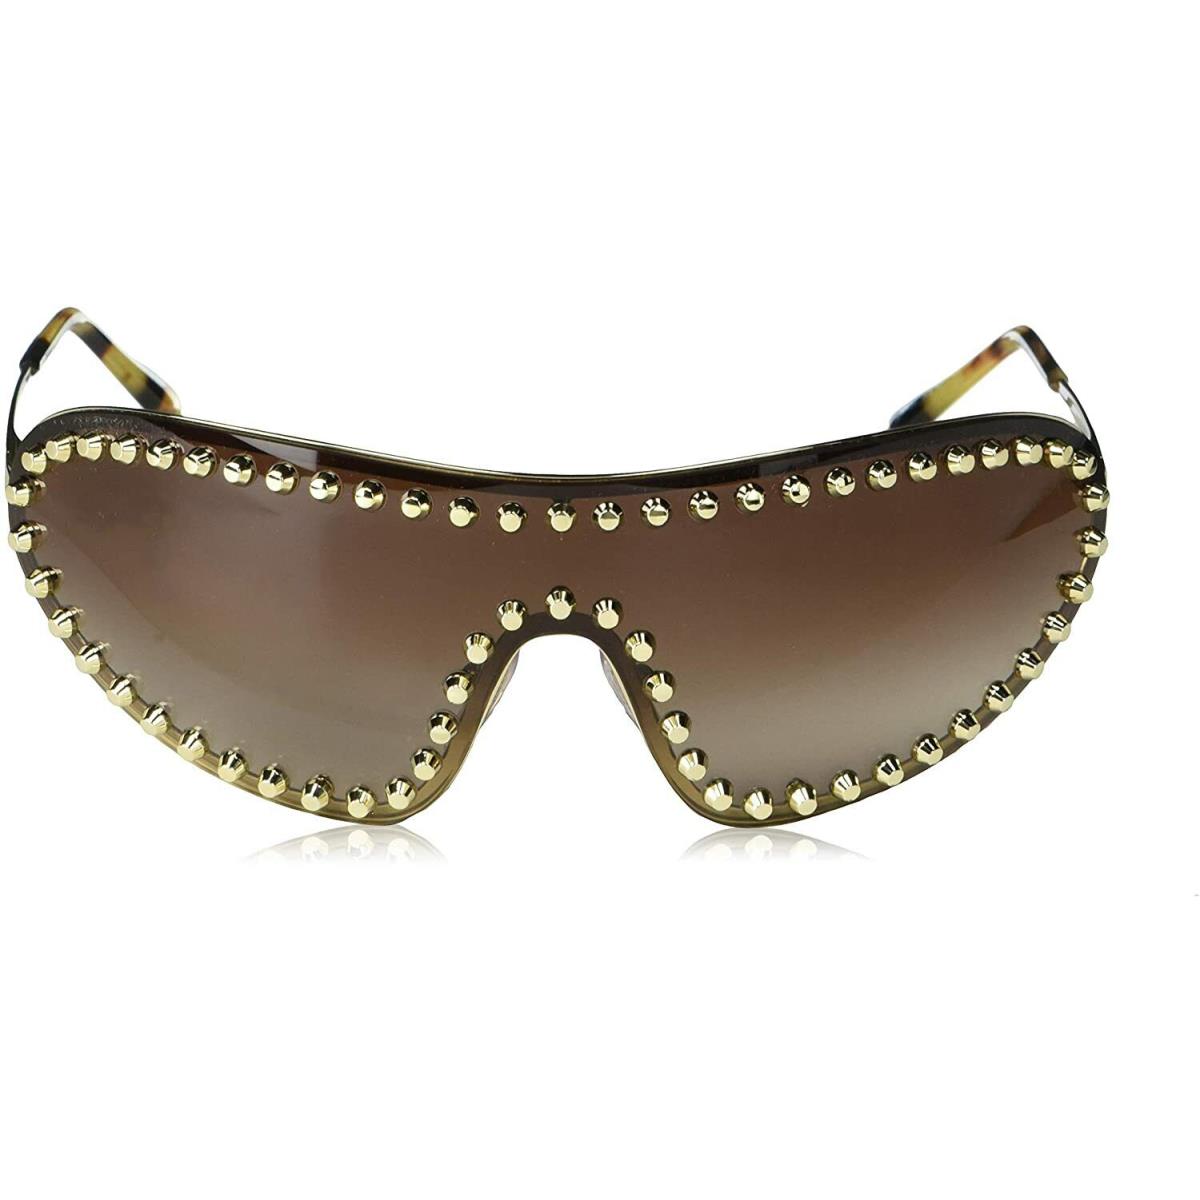 Prada Sunglasses 0PR 73VS 5086S1 40-17-120 Fashion Designer Eyeglasses - Frame: Gold, Lens: Brown